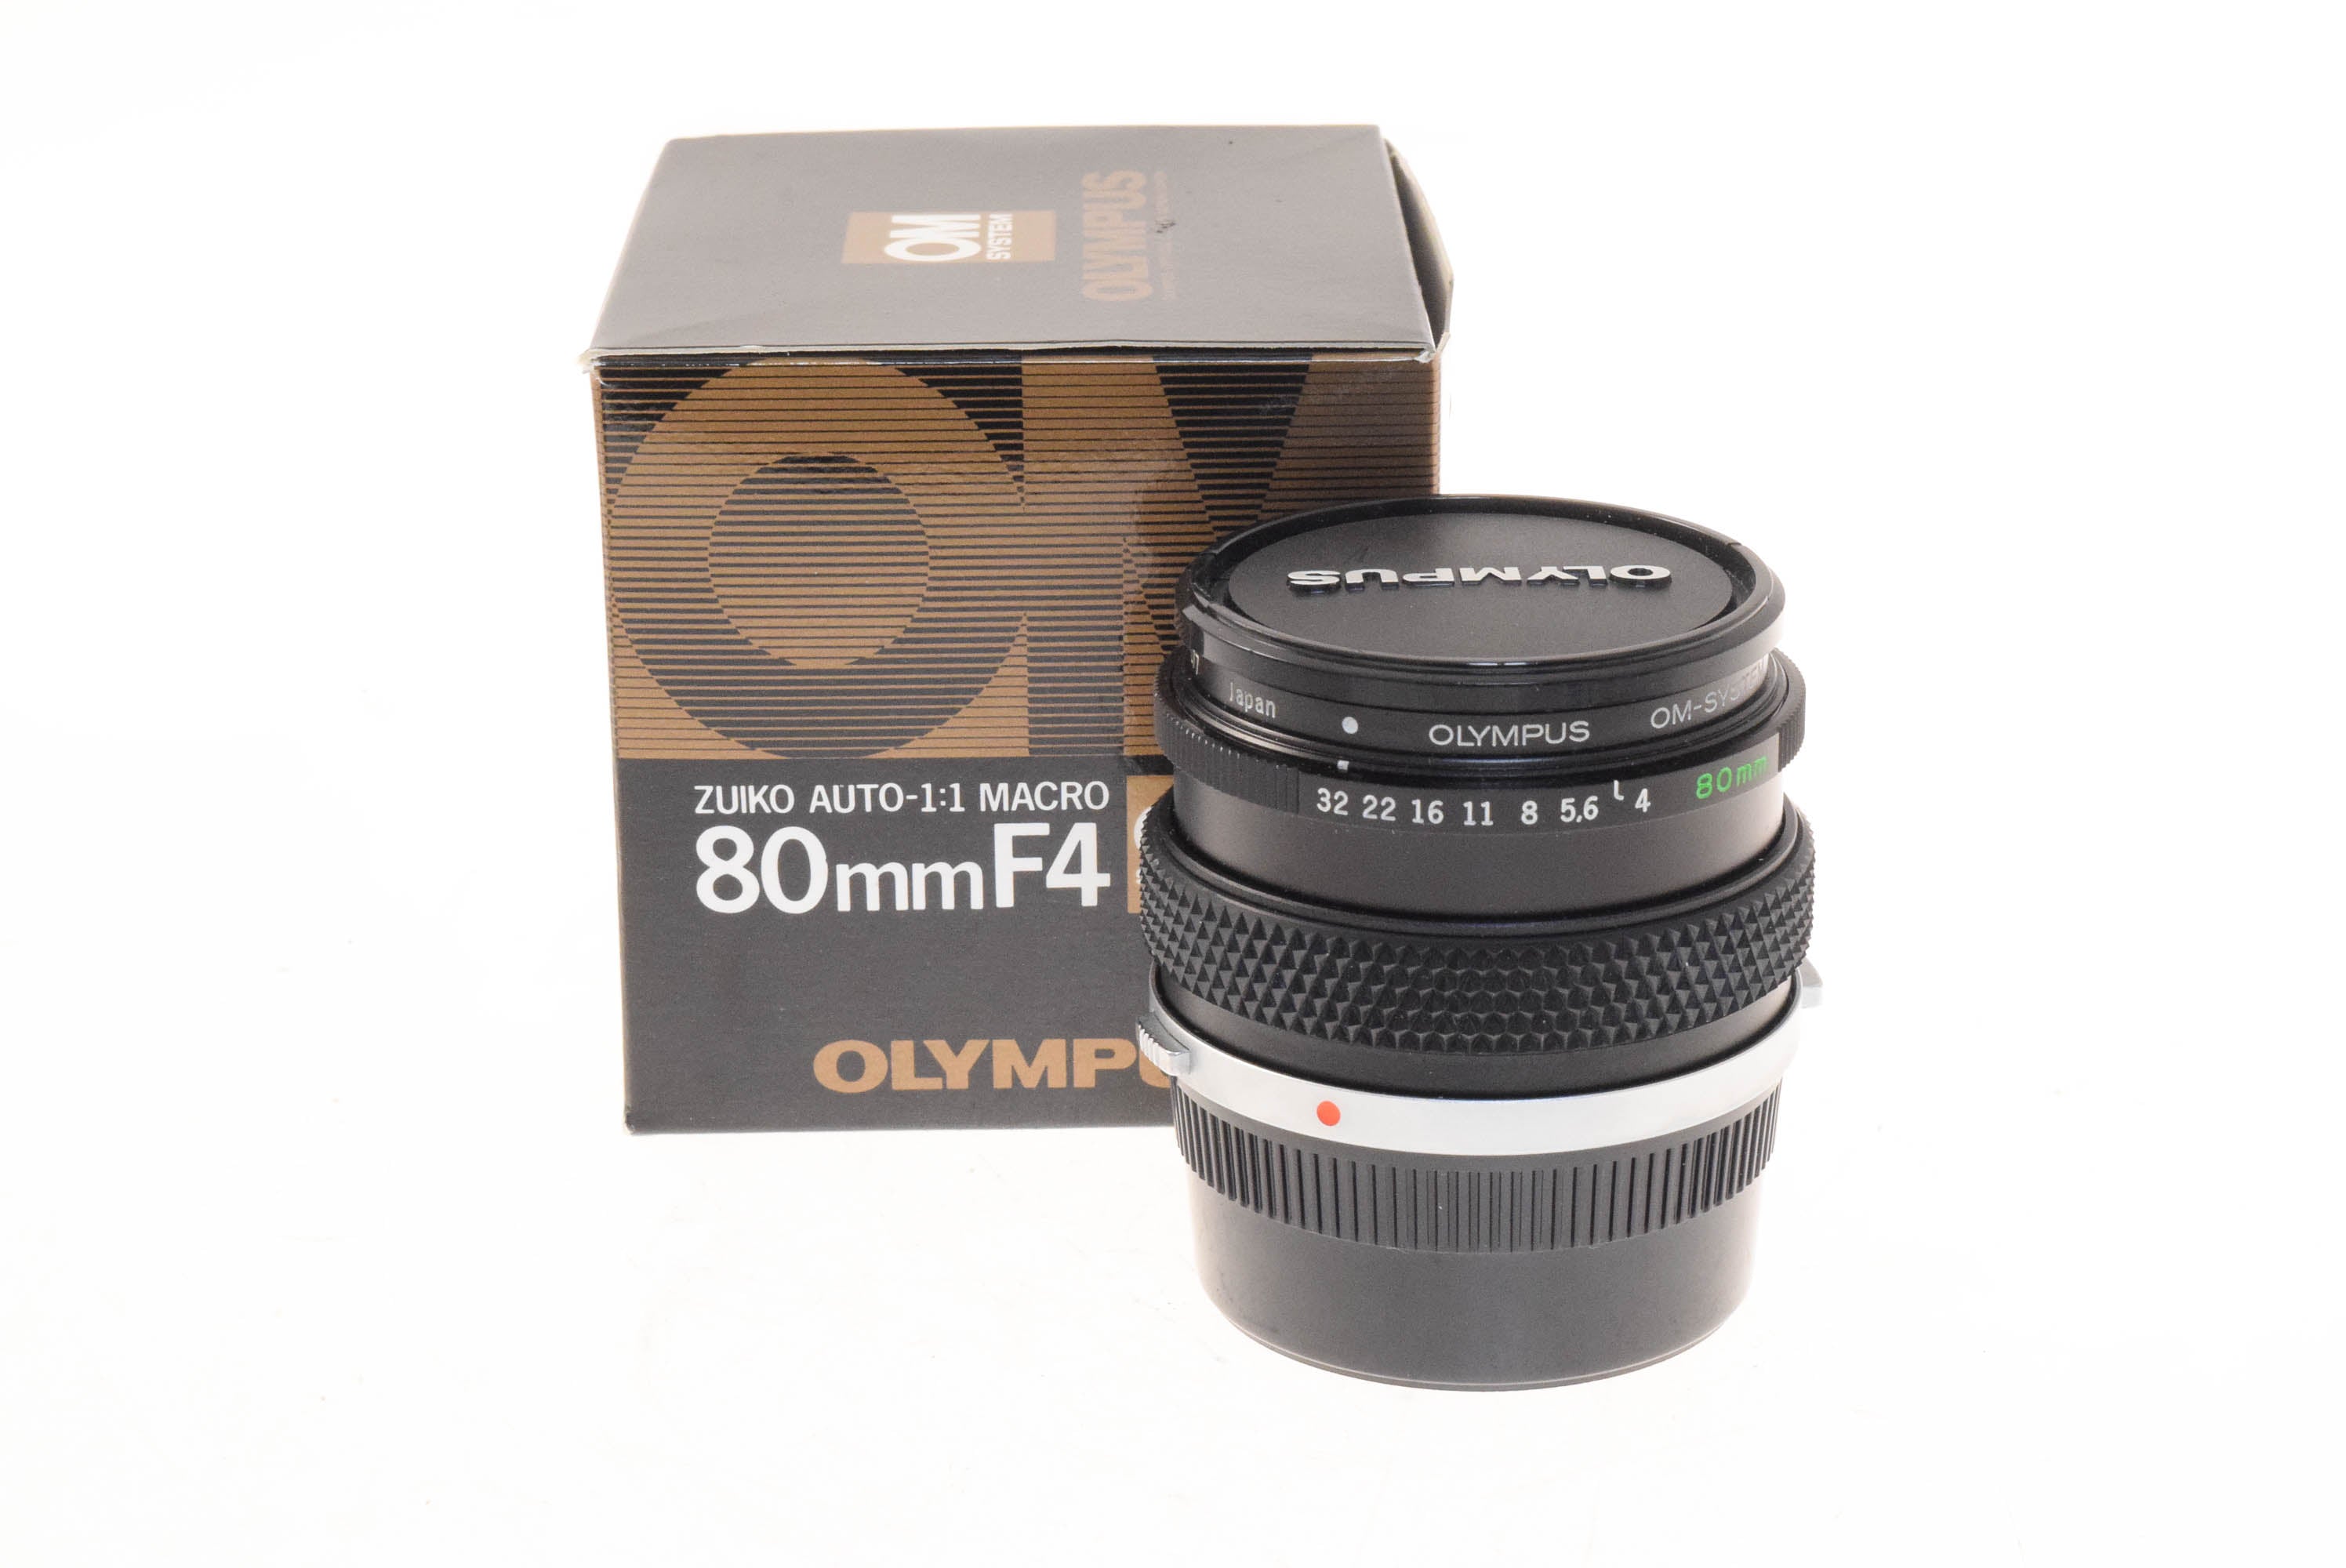 Olympus 80mm f4 Zuiko Auto-1:1 Macro - Lens – Kamerastore